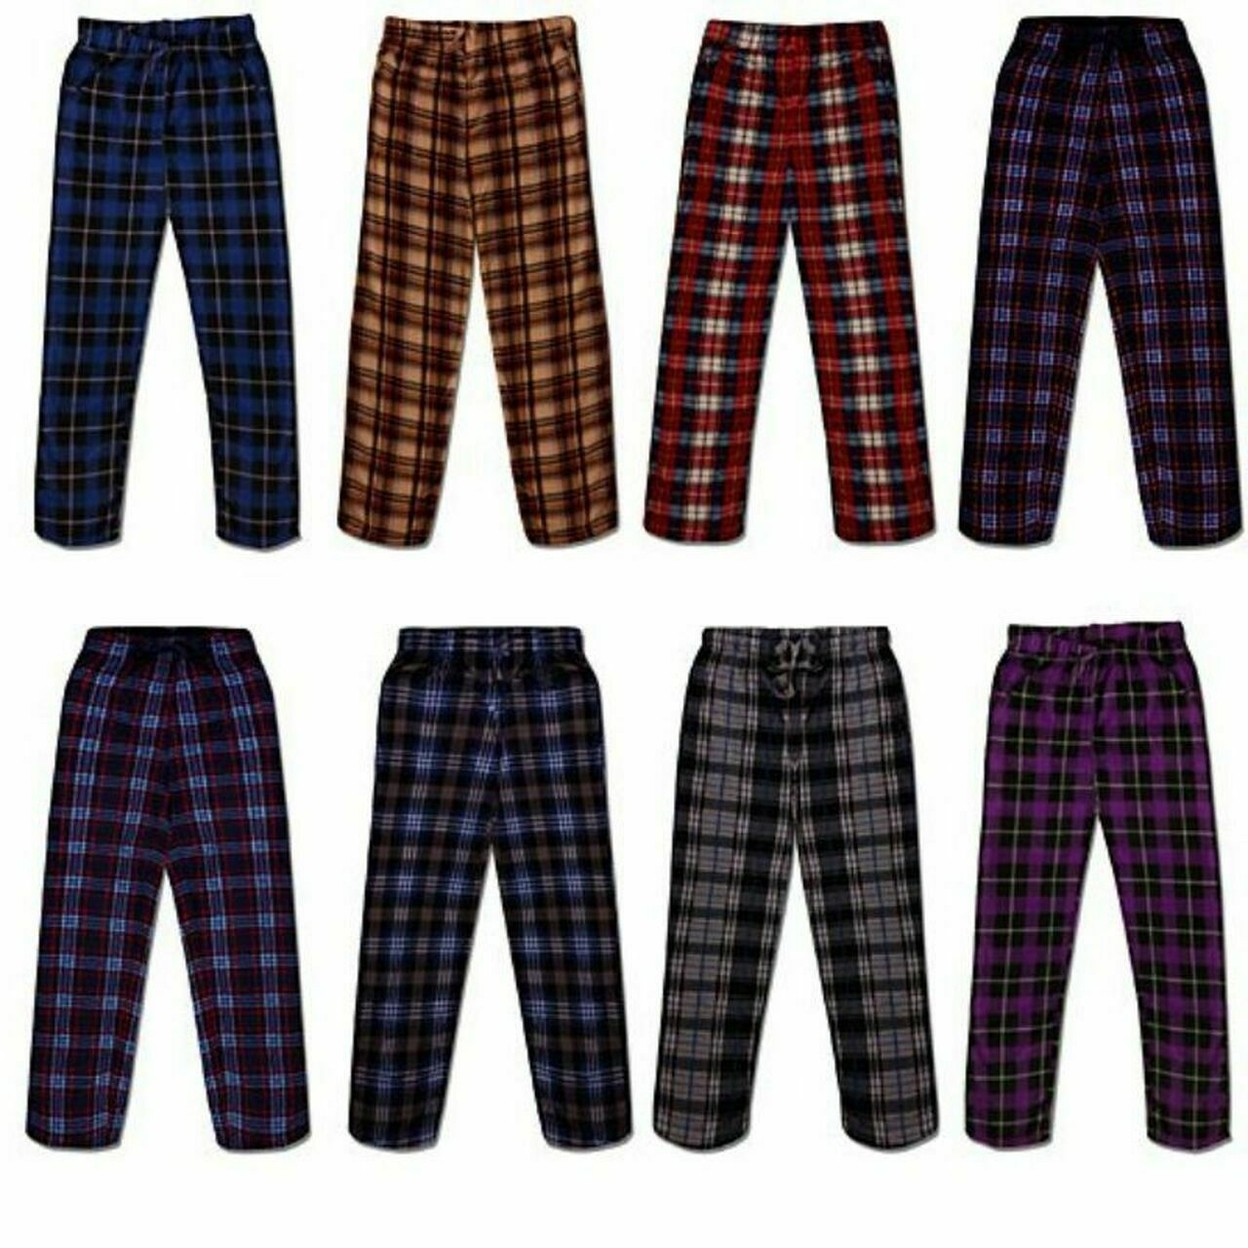 2-Pack: Men's Ultra Soft Cozy Flannel Fleece Plaid Pajama Sleep Bottom Lounge Pants - Black & Black, X-large